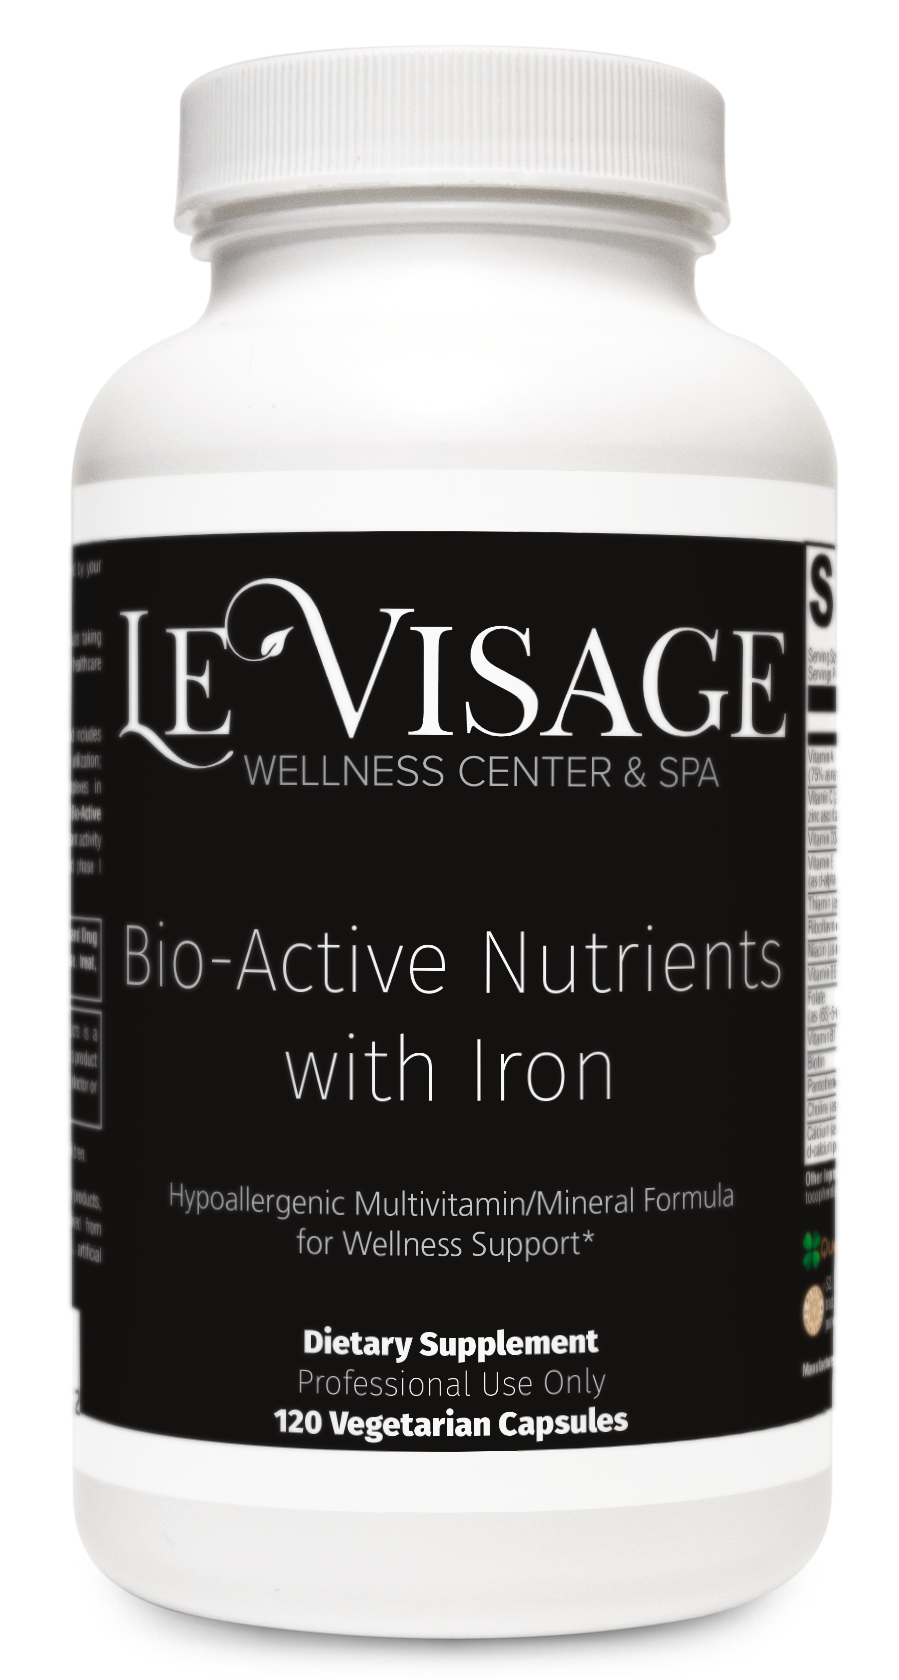 Bio-Active Nutrients with Iron